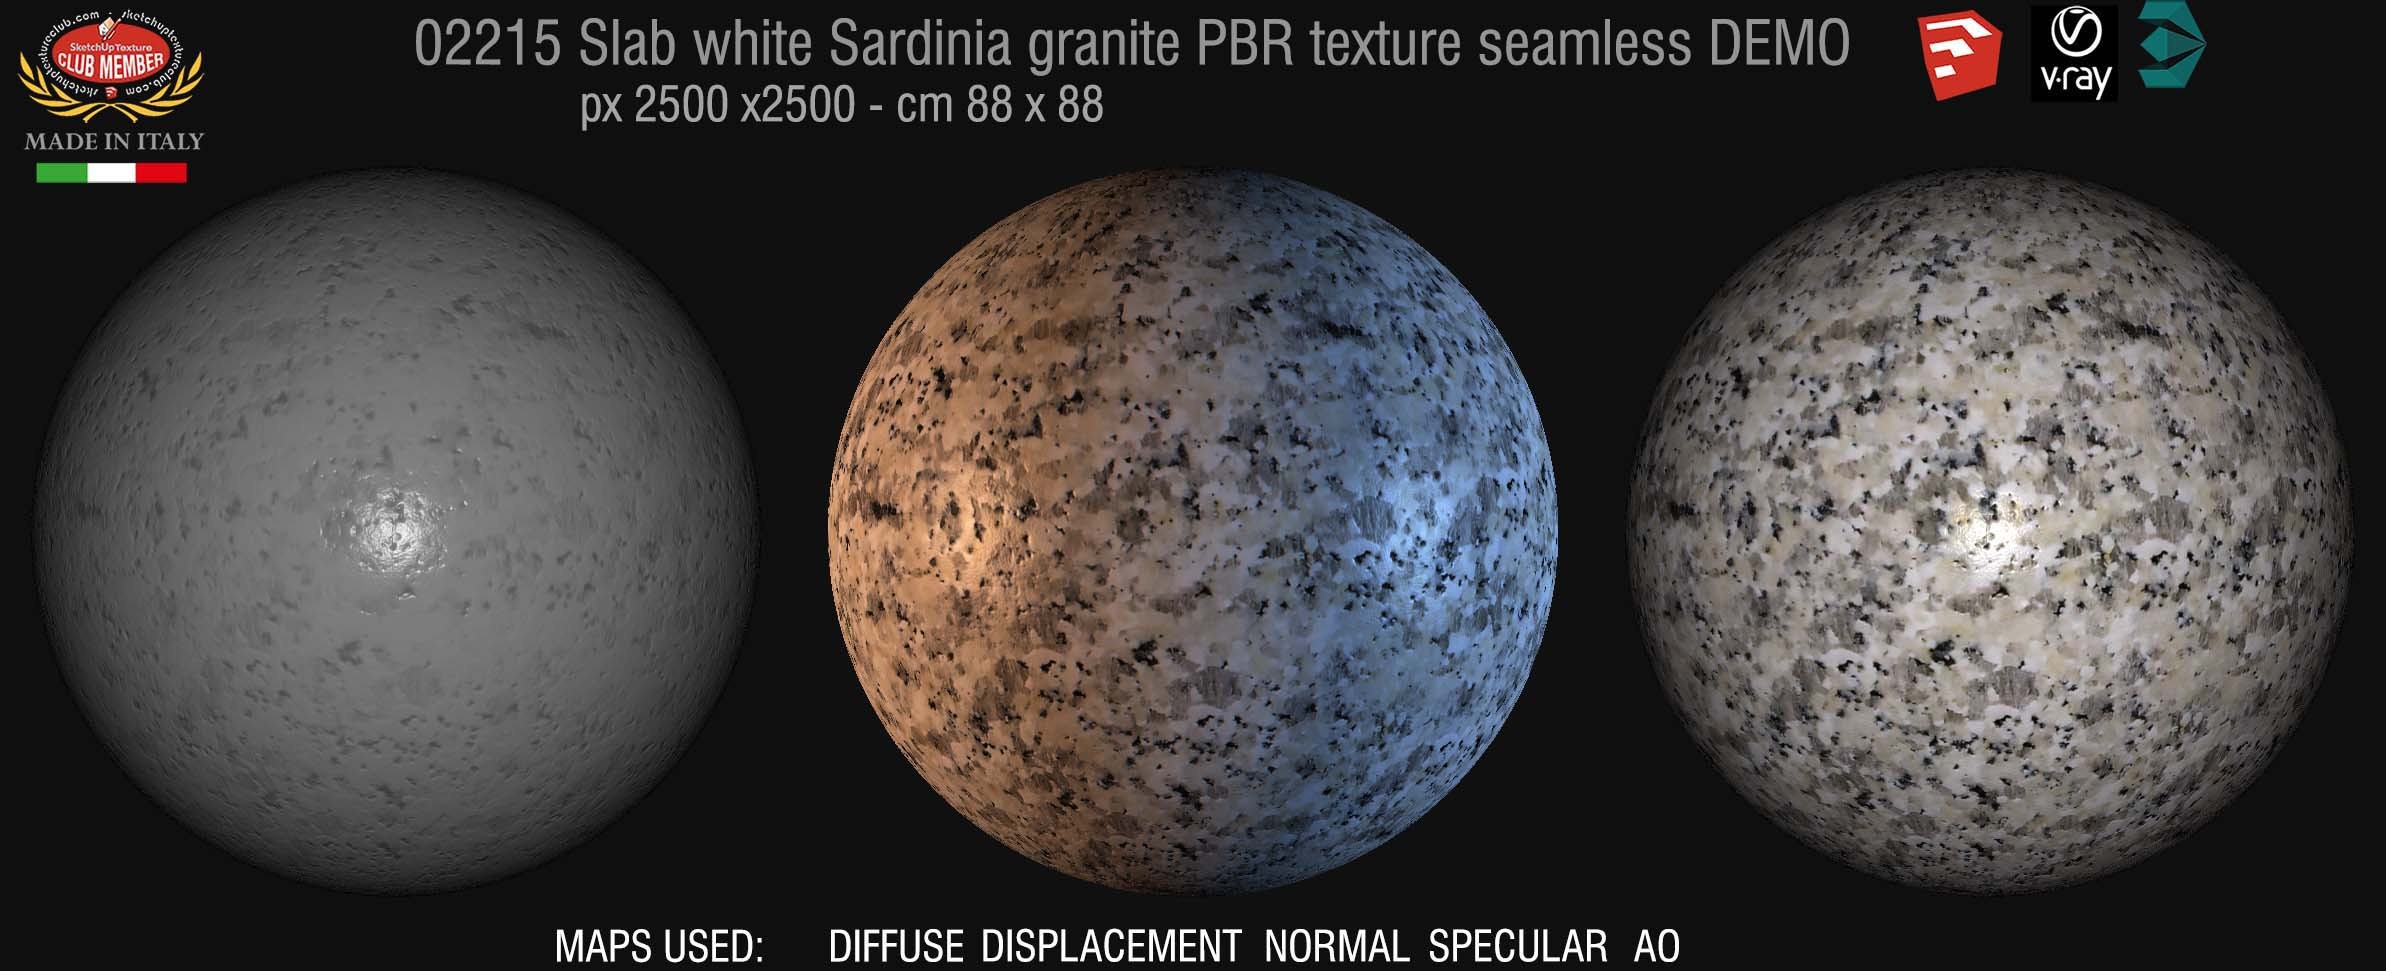 02215 slab white Sardinia granite PBR texture seamless DEMO